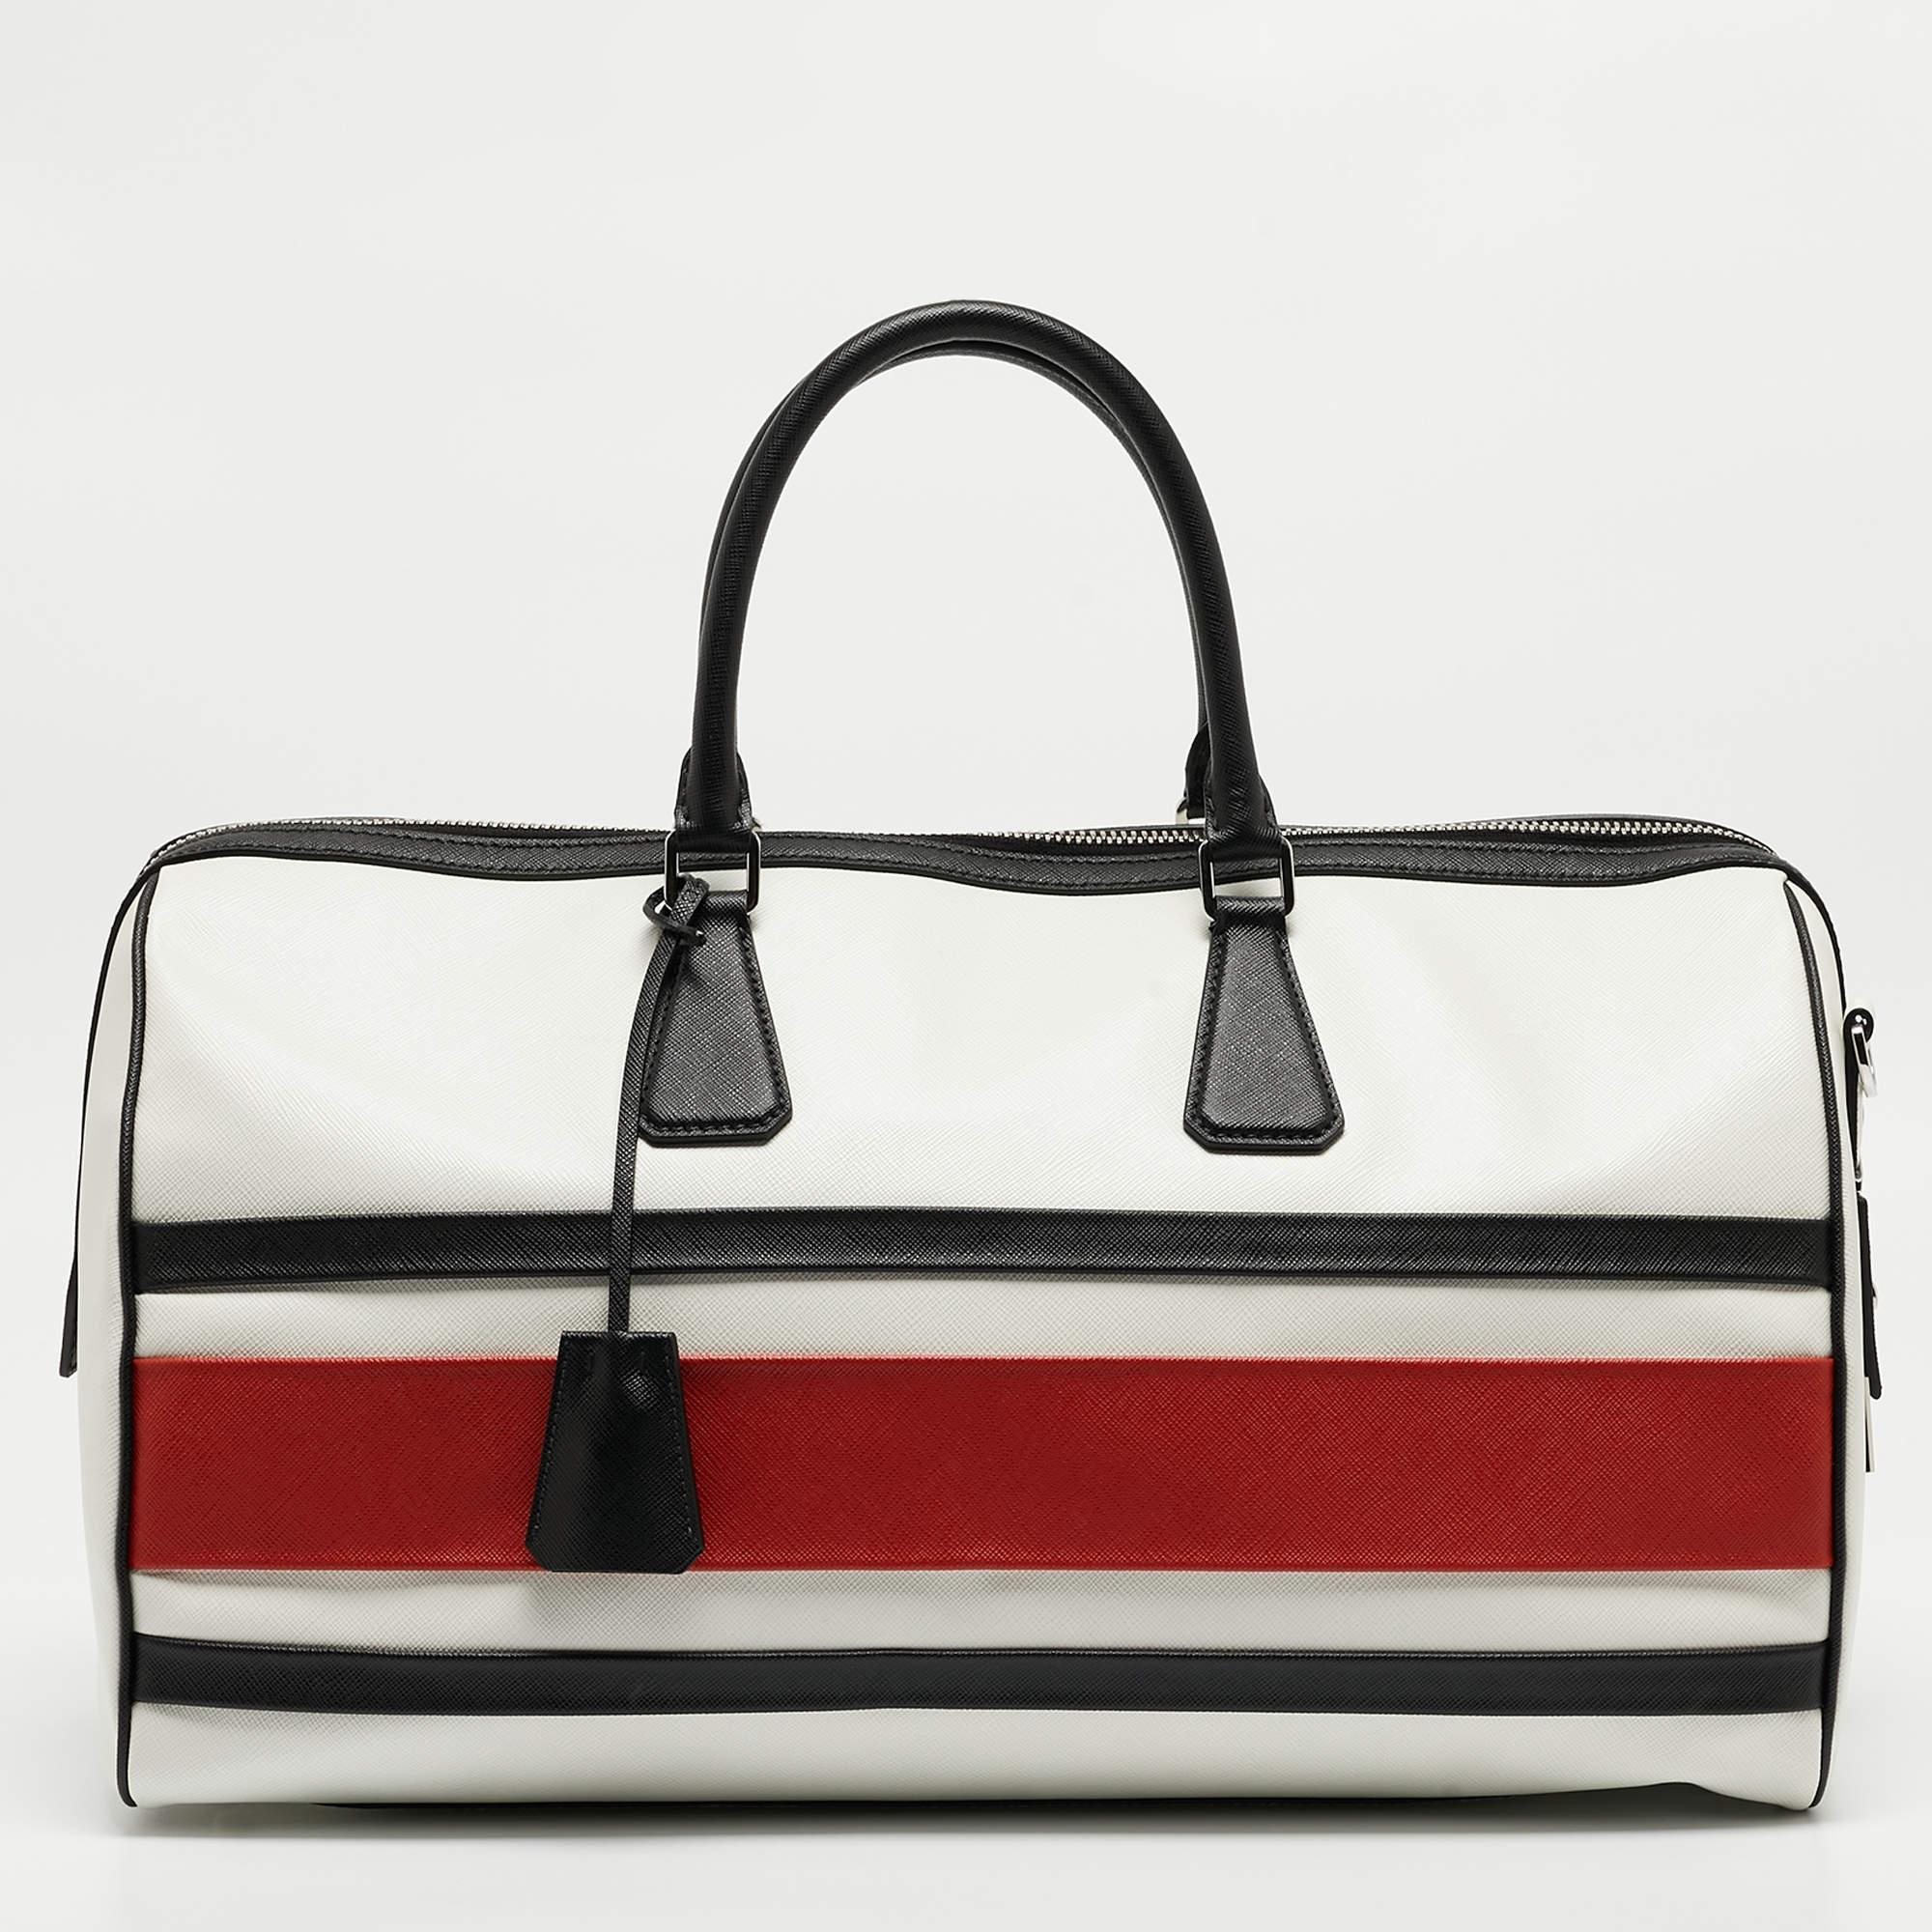 Prada Tricolor Saffiano Leather Travel Bag For Sale 4